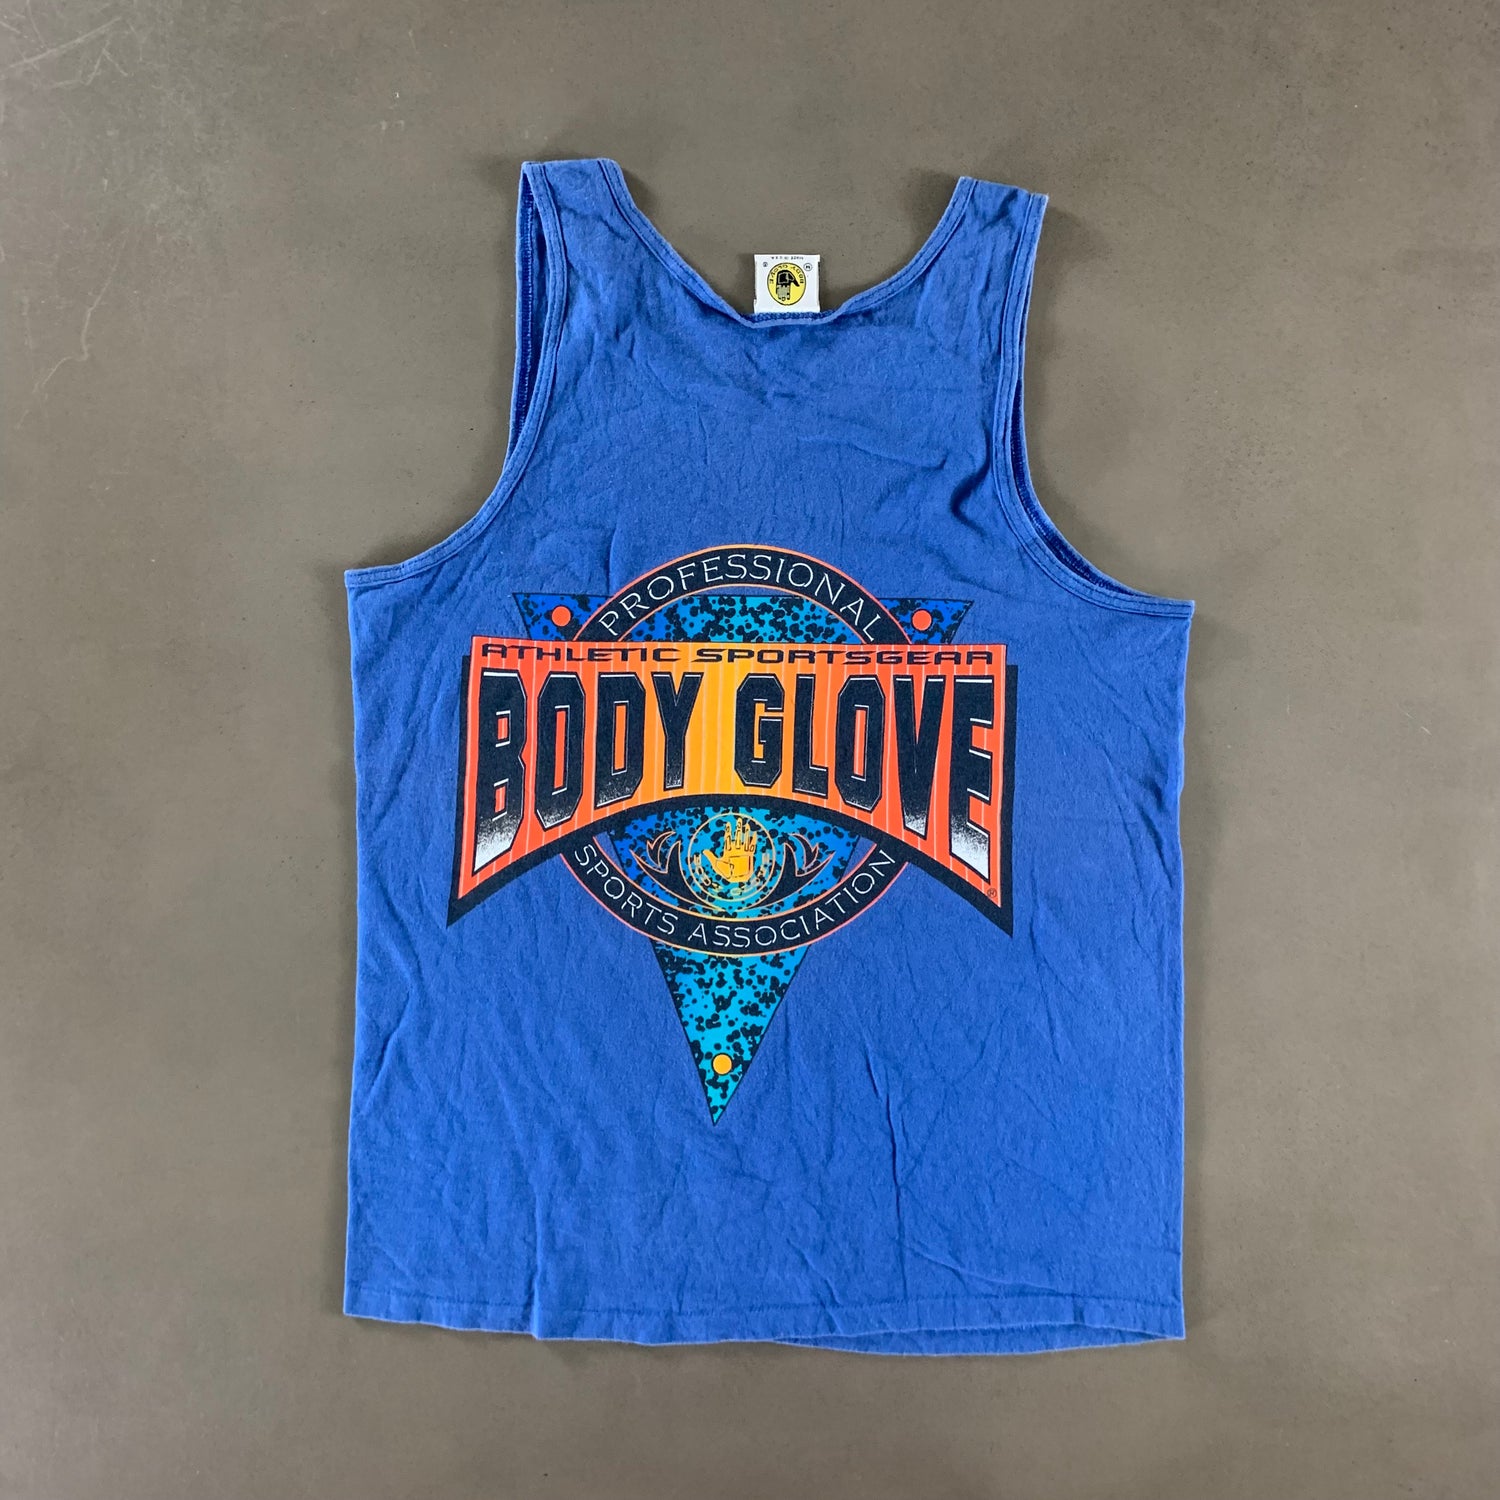 Vintage 1990s Body Glove Tank size Medium